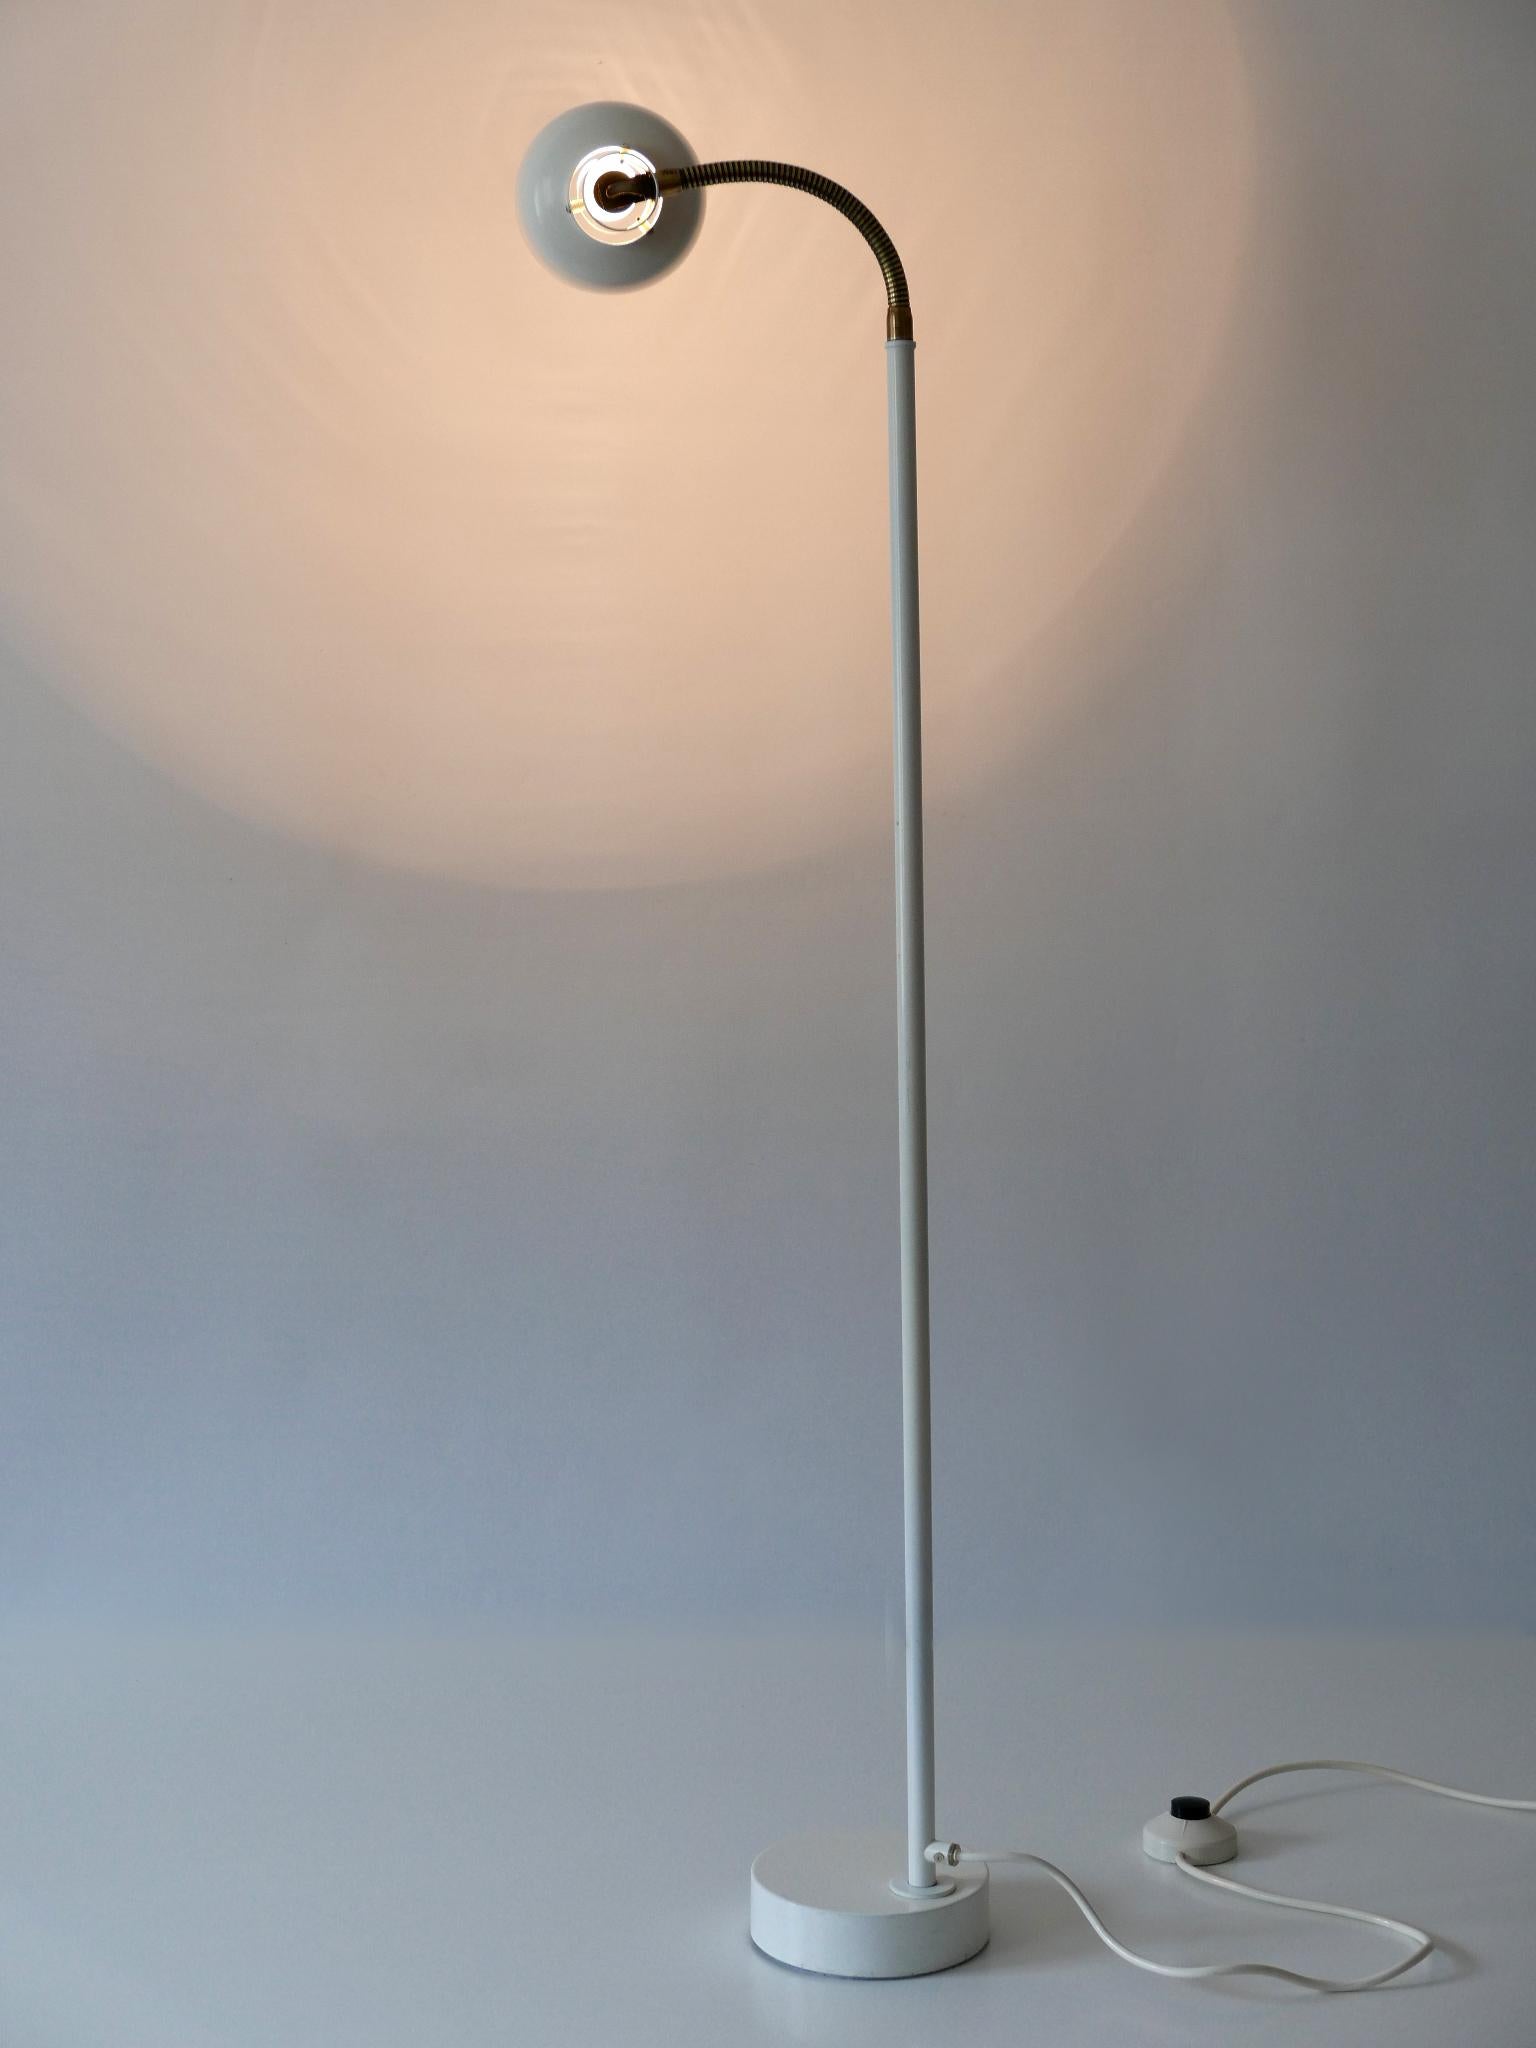 Rare Mid-Century Modern Floor Lamp or Reading Light by Hans-Agne Jakobsson 1960s For Sale 9